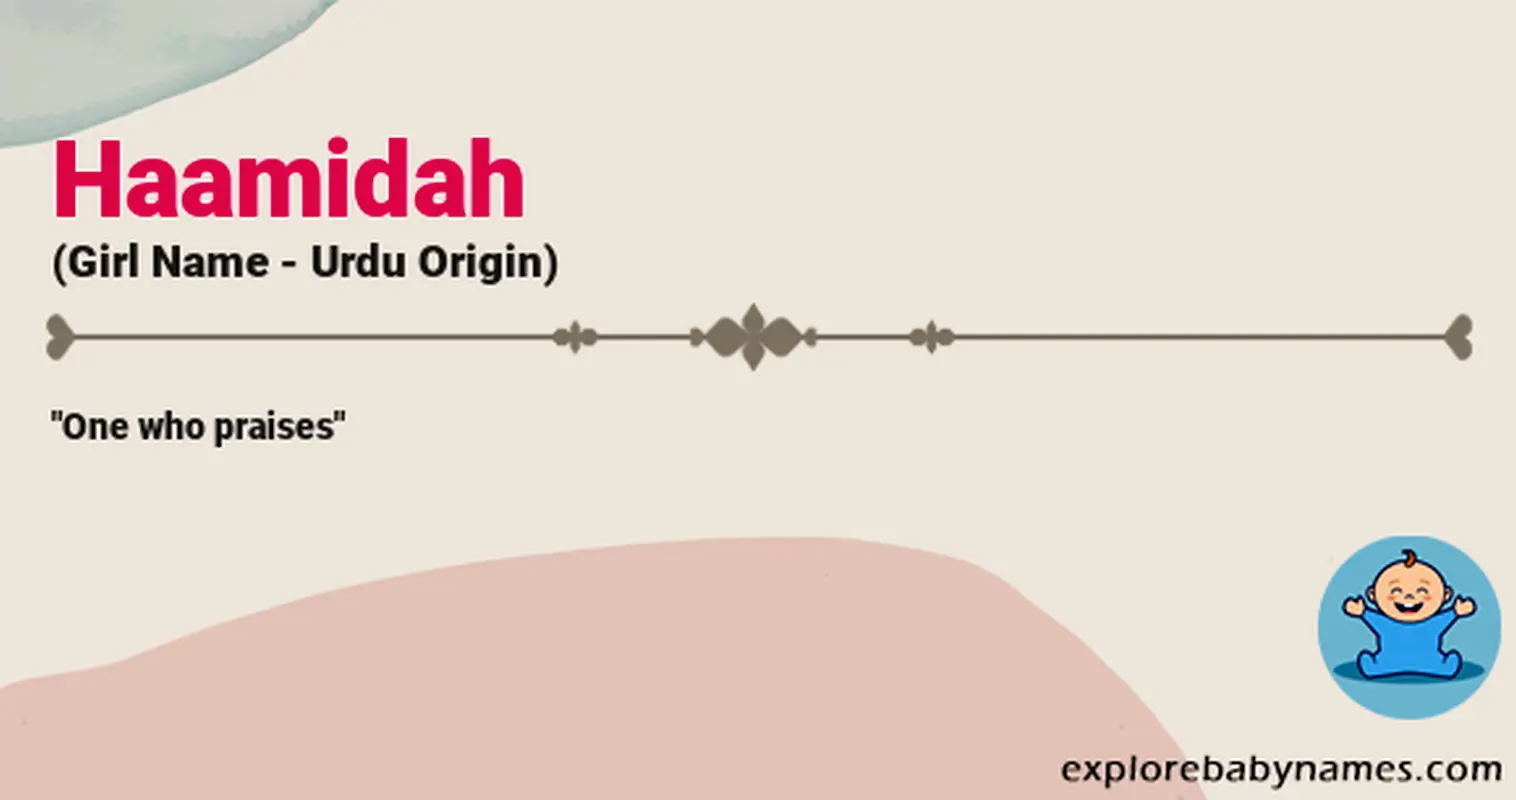 Meaning of Haamidah